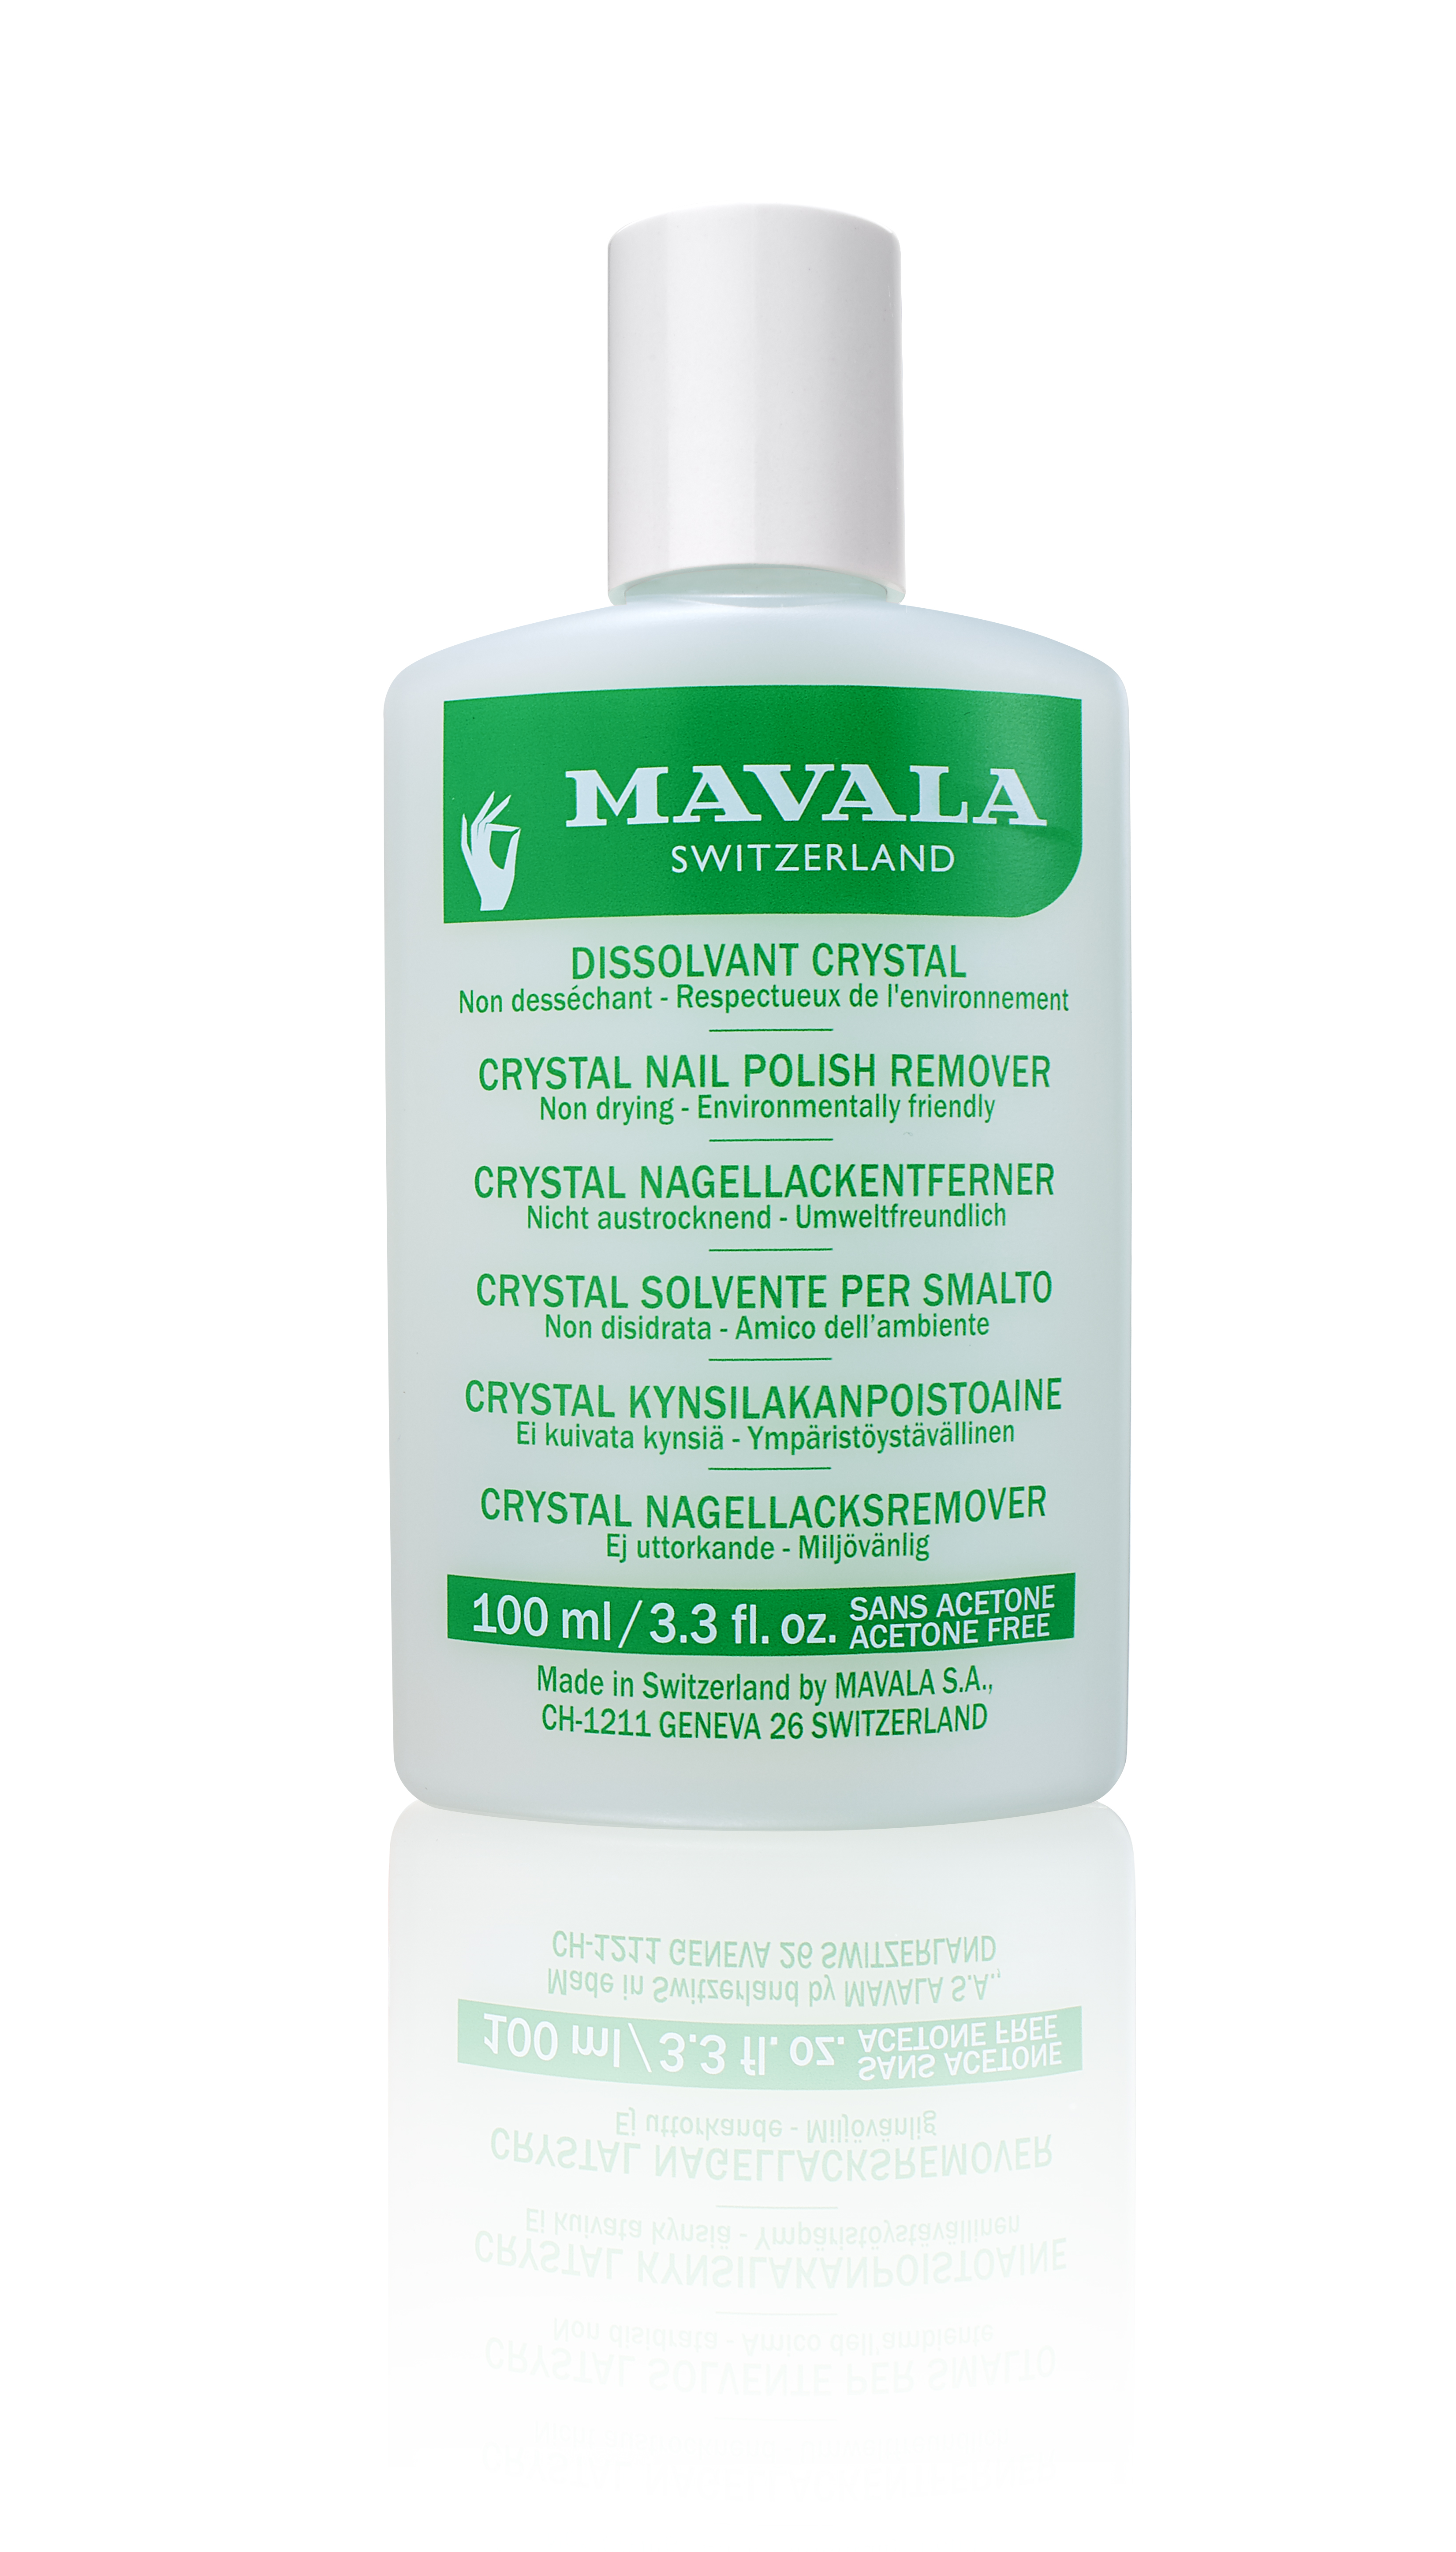 926.20 MAVALA - Crystal Nagellackentferner - ohne Aceton, ohne Geruch, ohne Farbstoff - Vegan